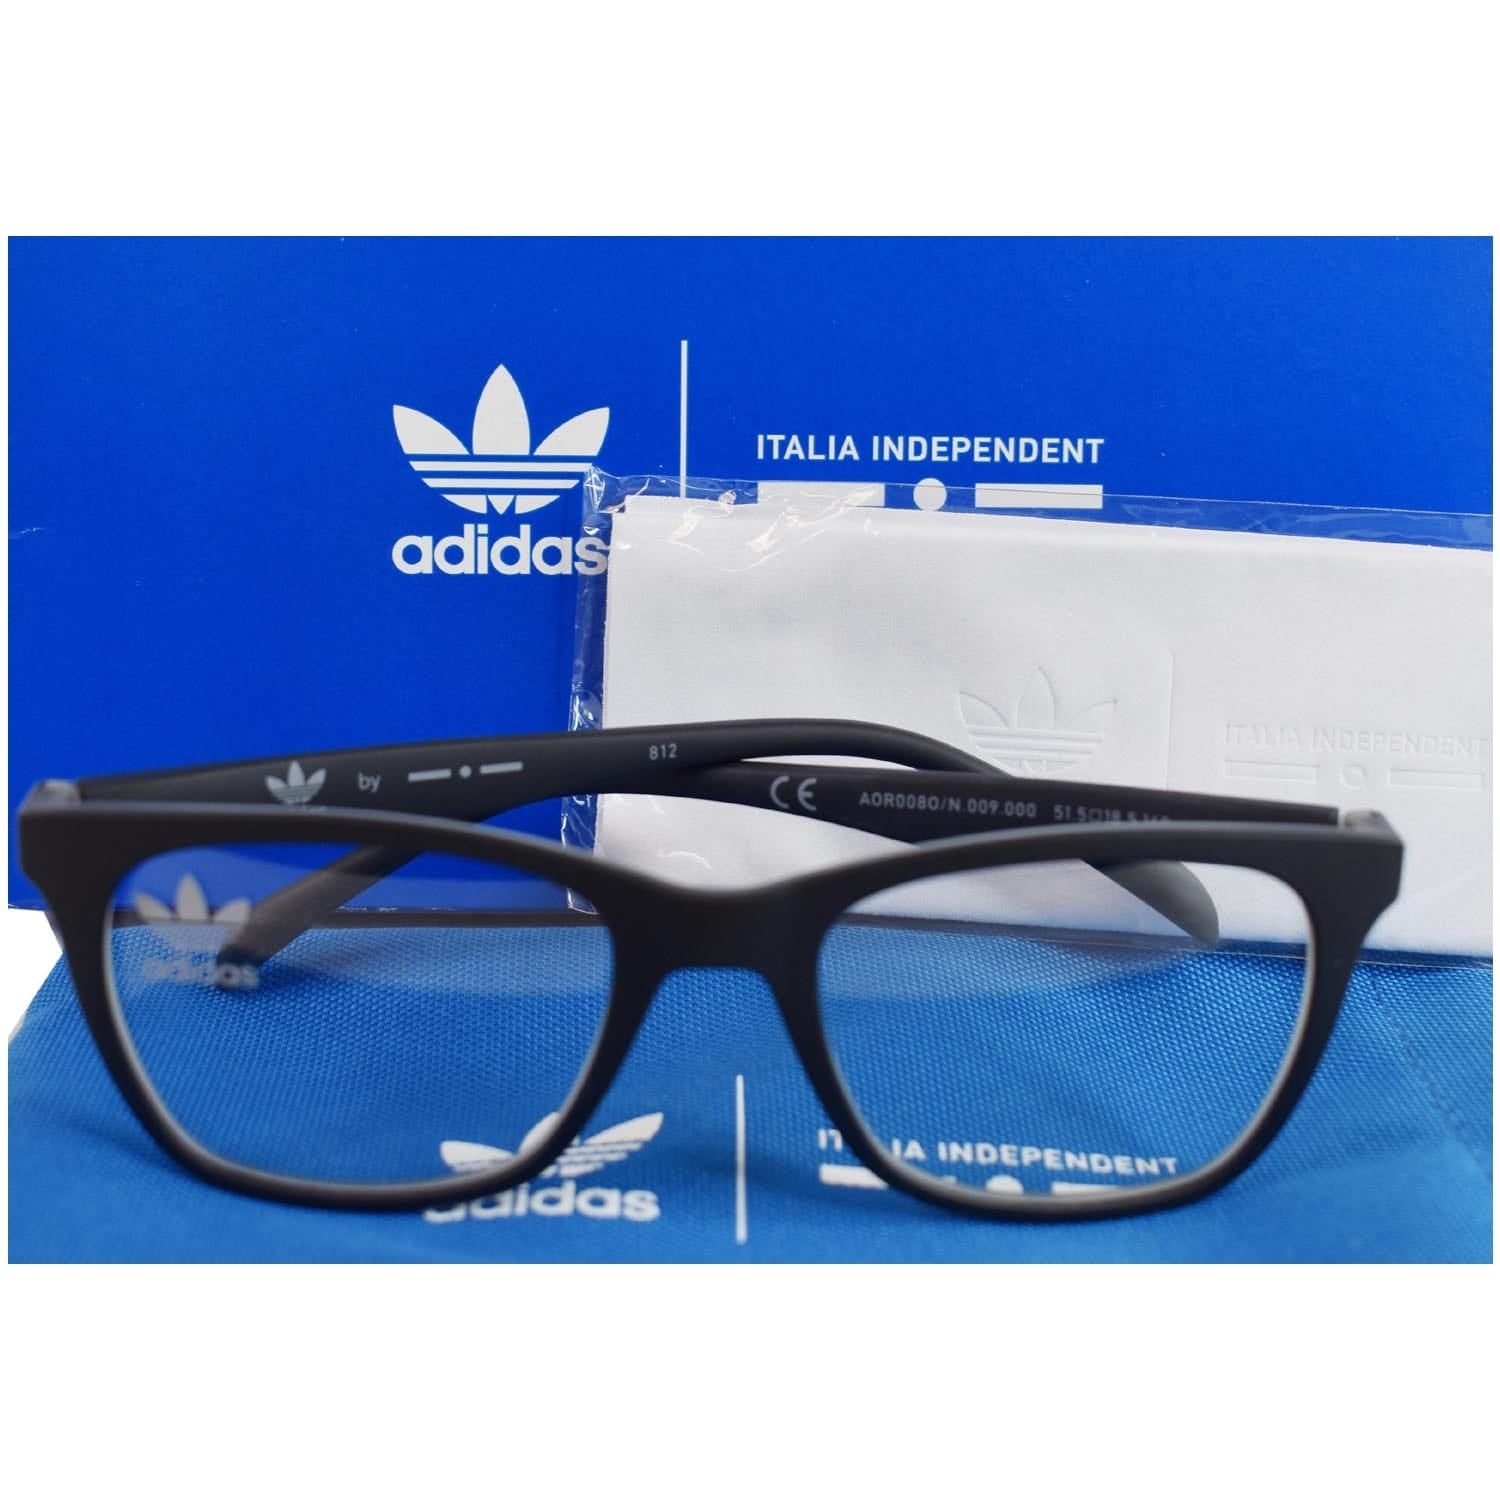 ADIDAS 009.000 Black Frame Eyeglasses Demo